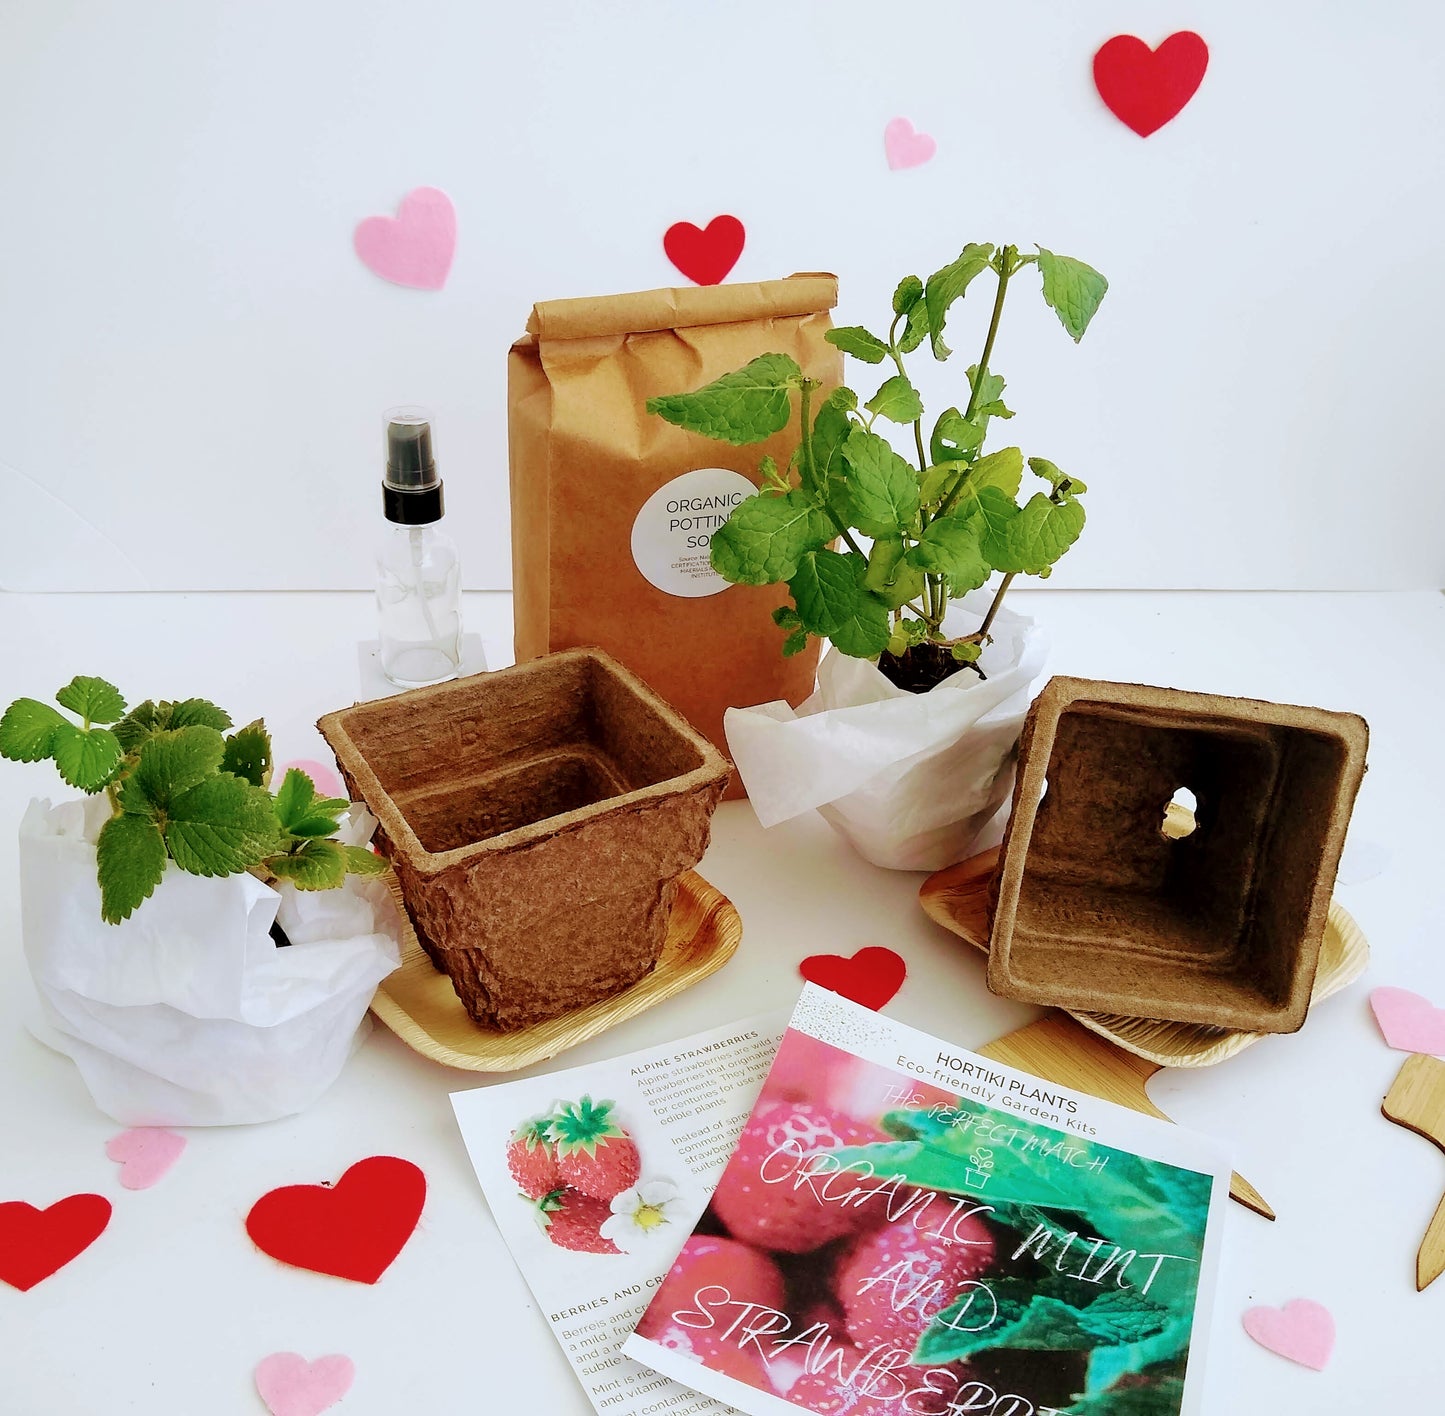 Organic Strawberry and Chocolate Mint Indoor Garden Kit